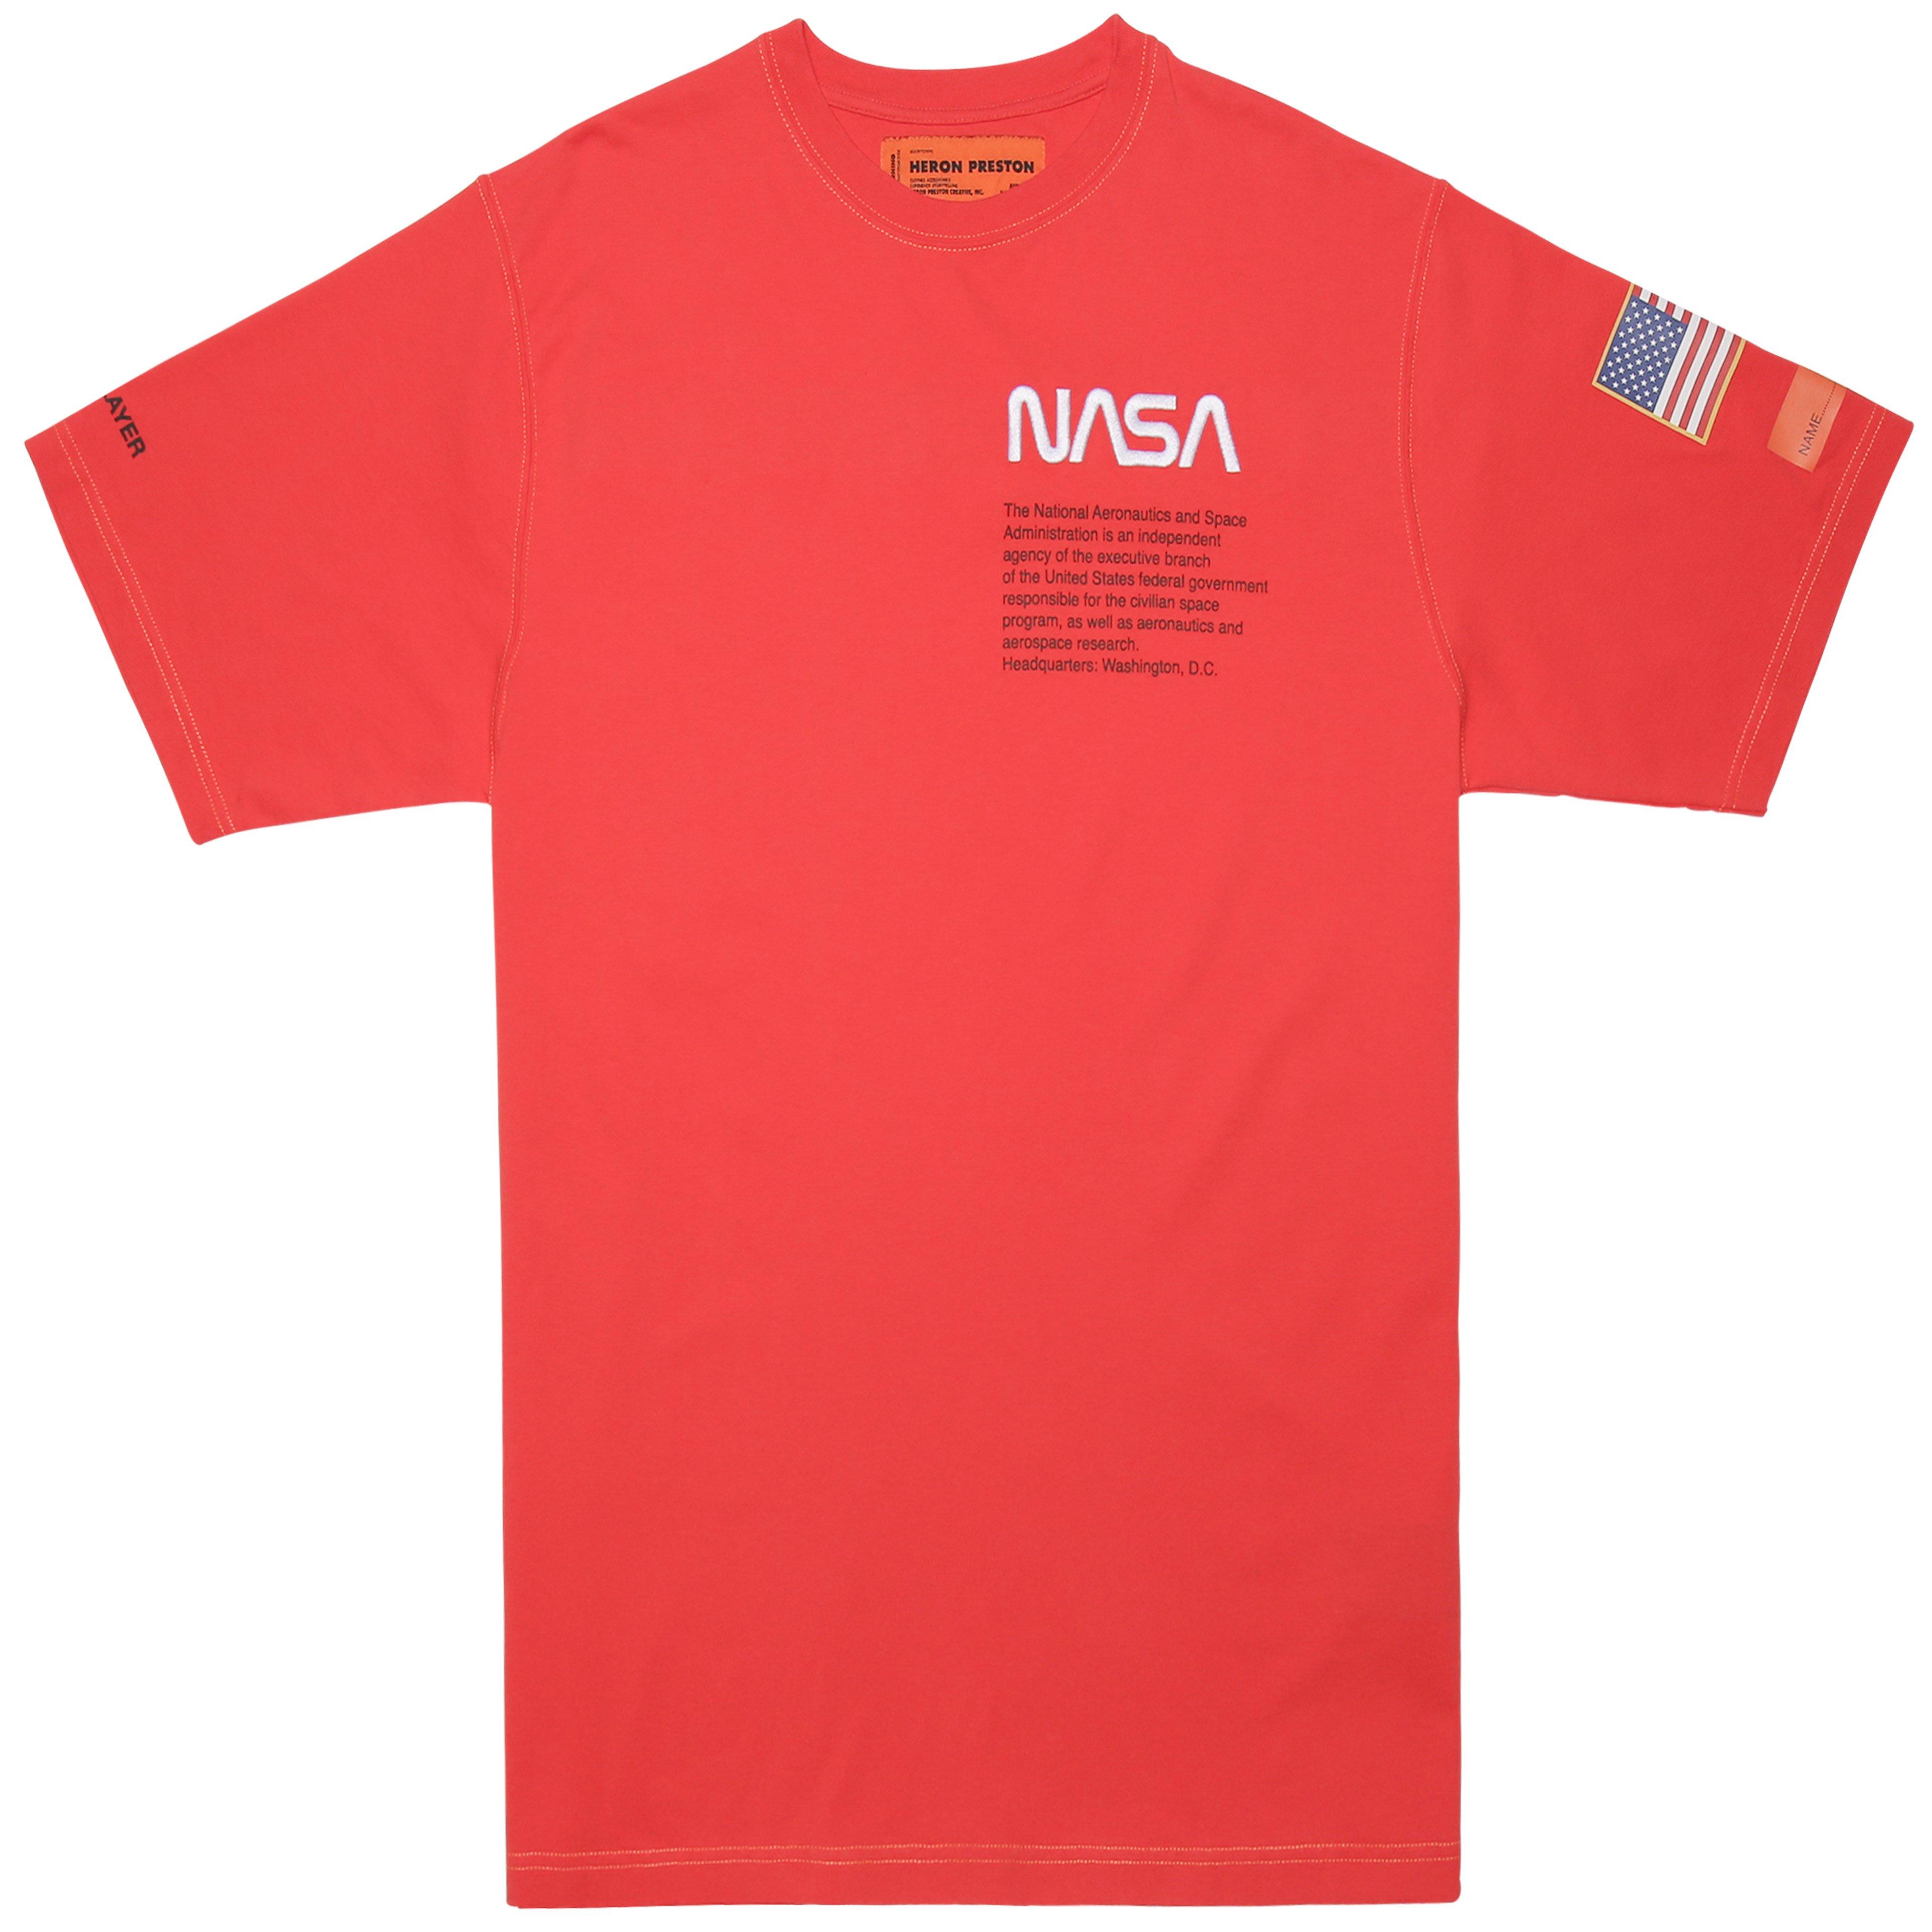 Heron Preston Nasa Jersey T-shirt in Red for Men - Lyst